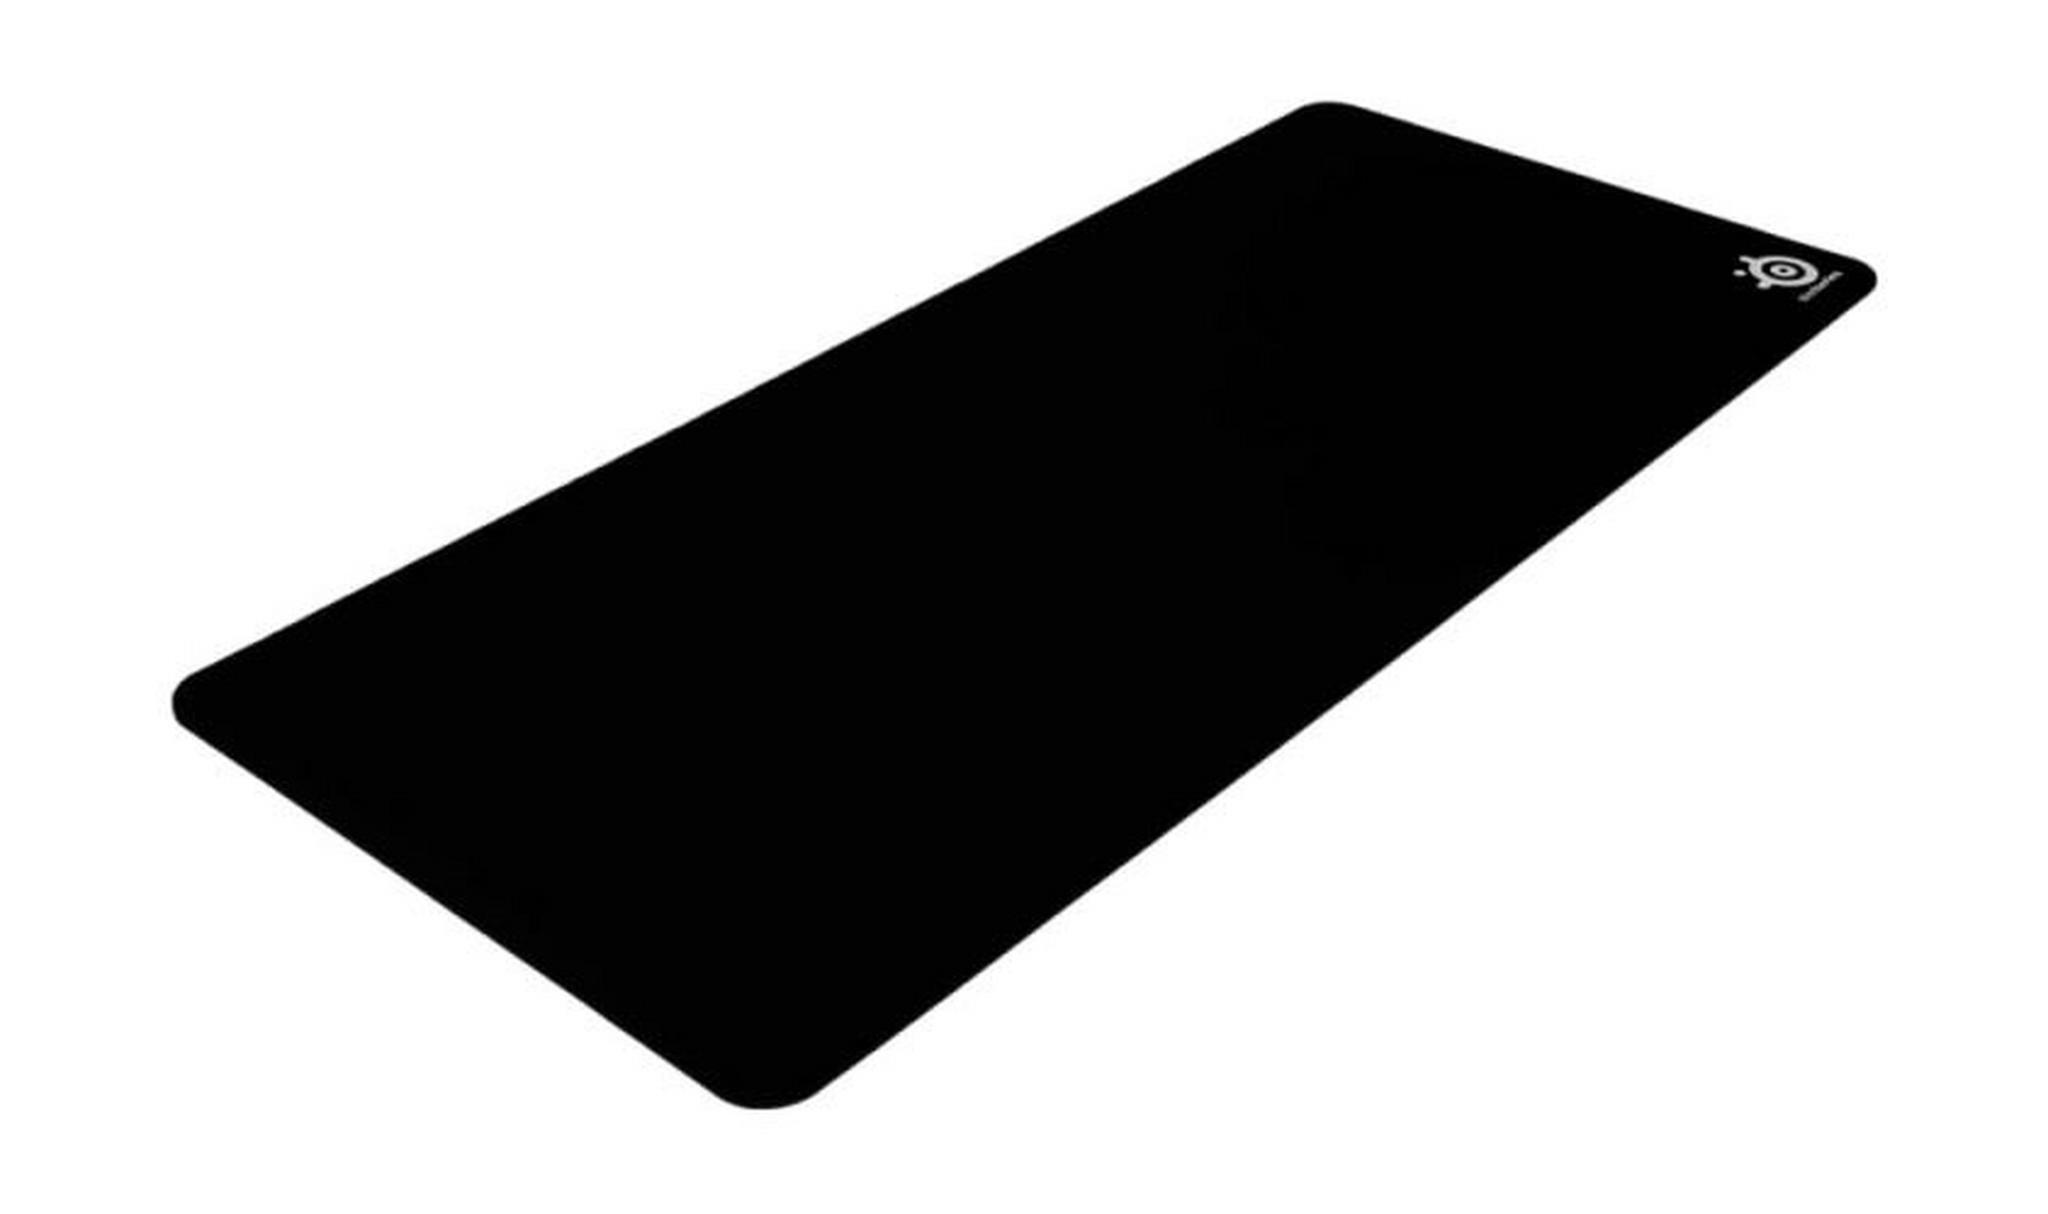 ماوس باد للألعاب كيو سي كي من ستيل سيريس - حجم كبير -  أسود (67500)